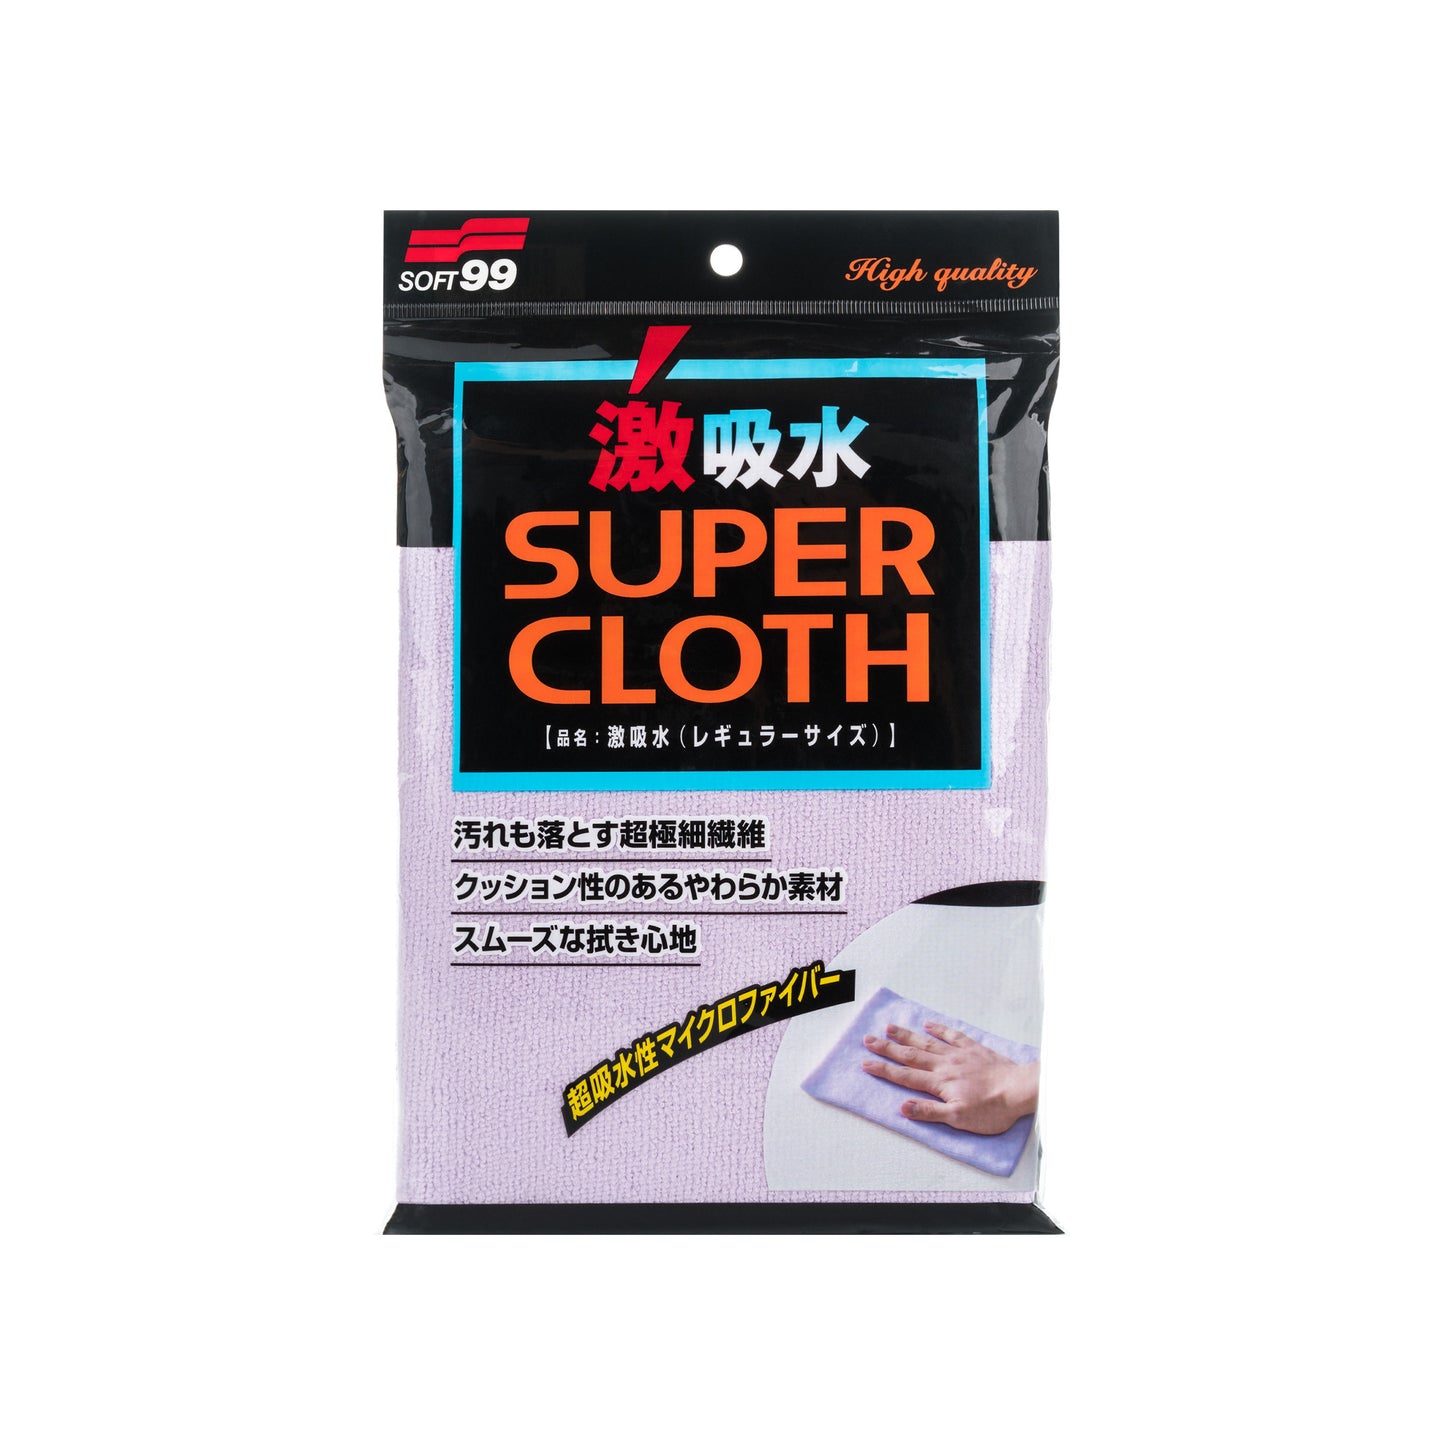 Super Cloth Microfiber (Mikrofasertuch)